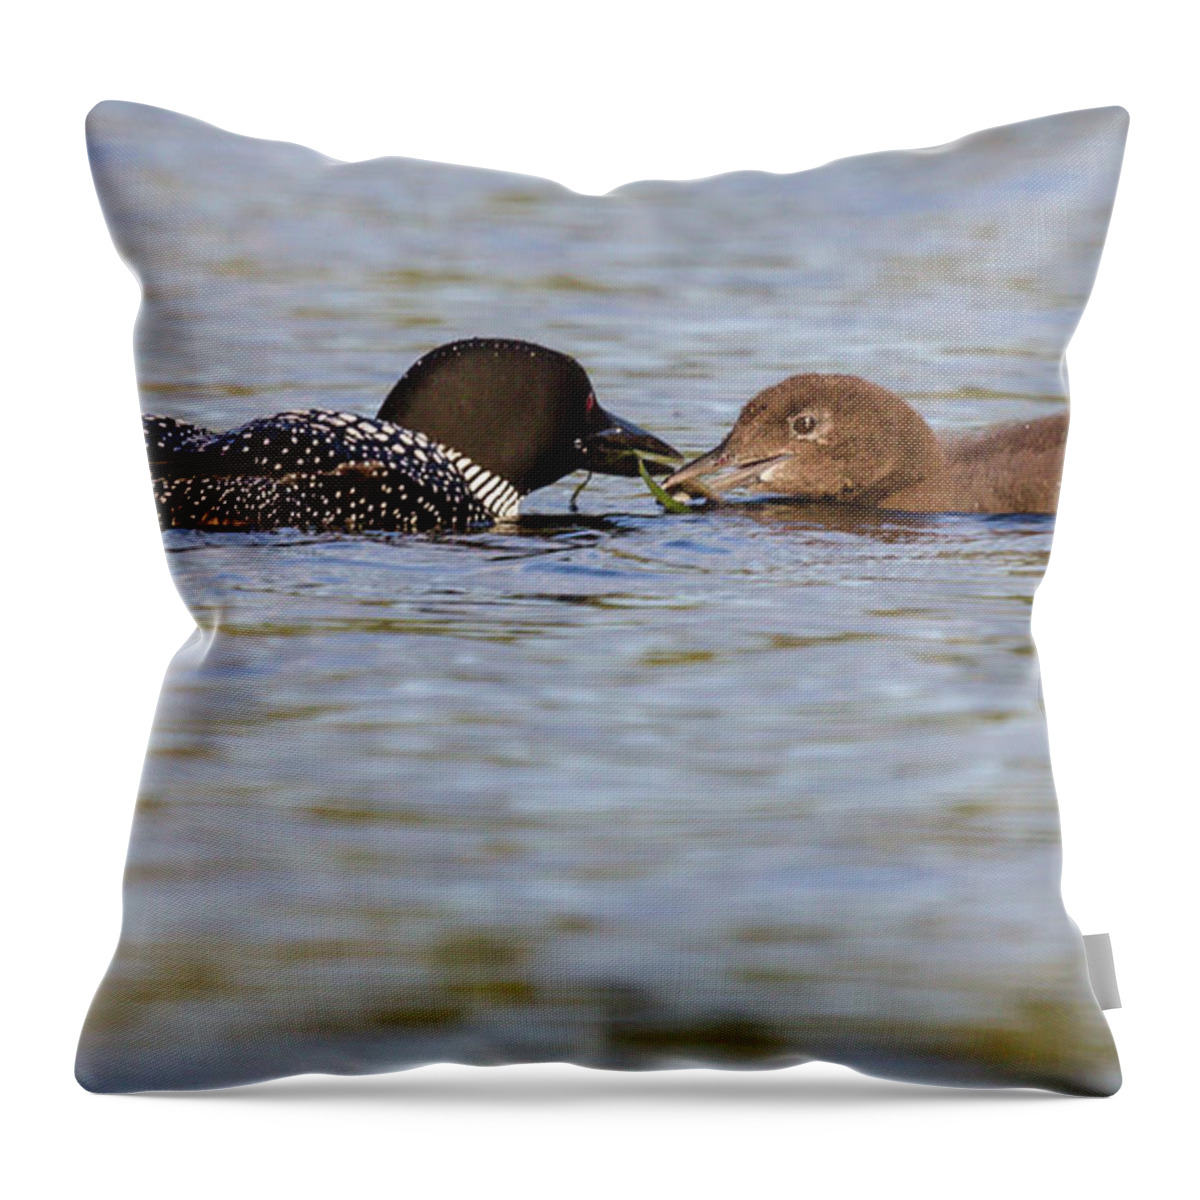 Bird Throw Pillow featuring the photograph Feeding Time by Darryl Hendricks